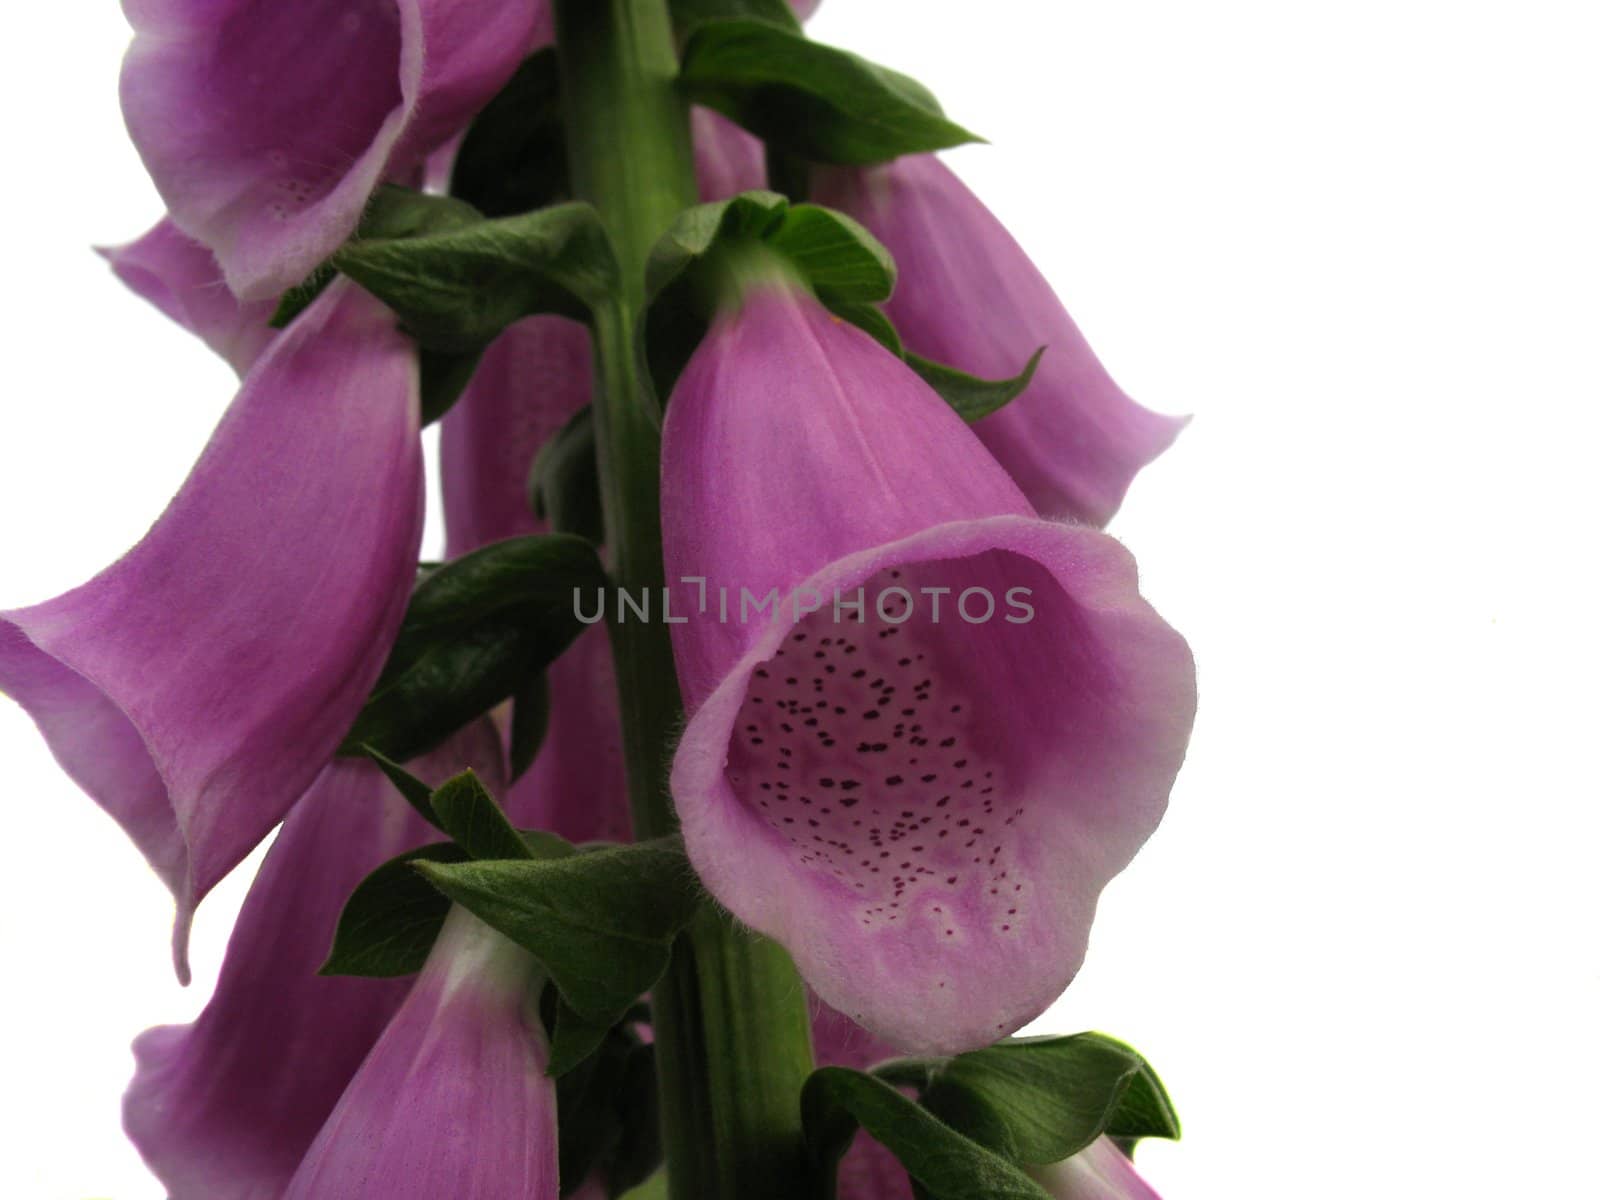 Foxglove (digitalis) flowers close up isolated image